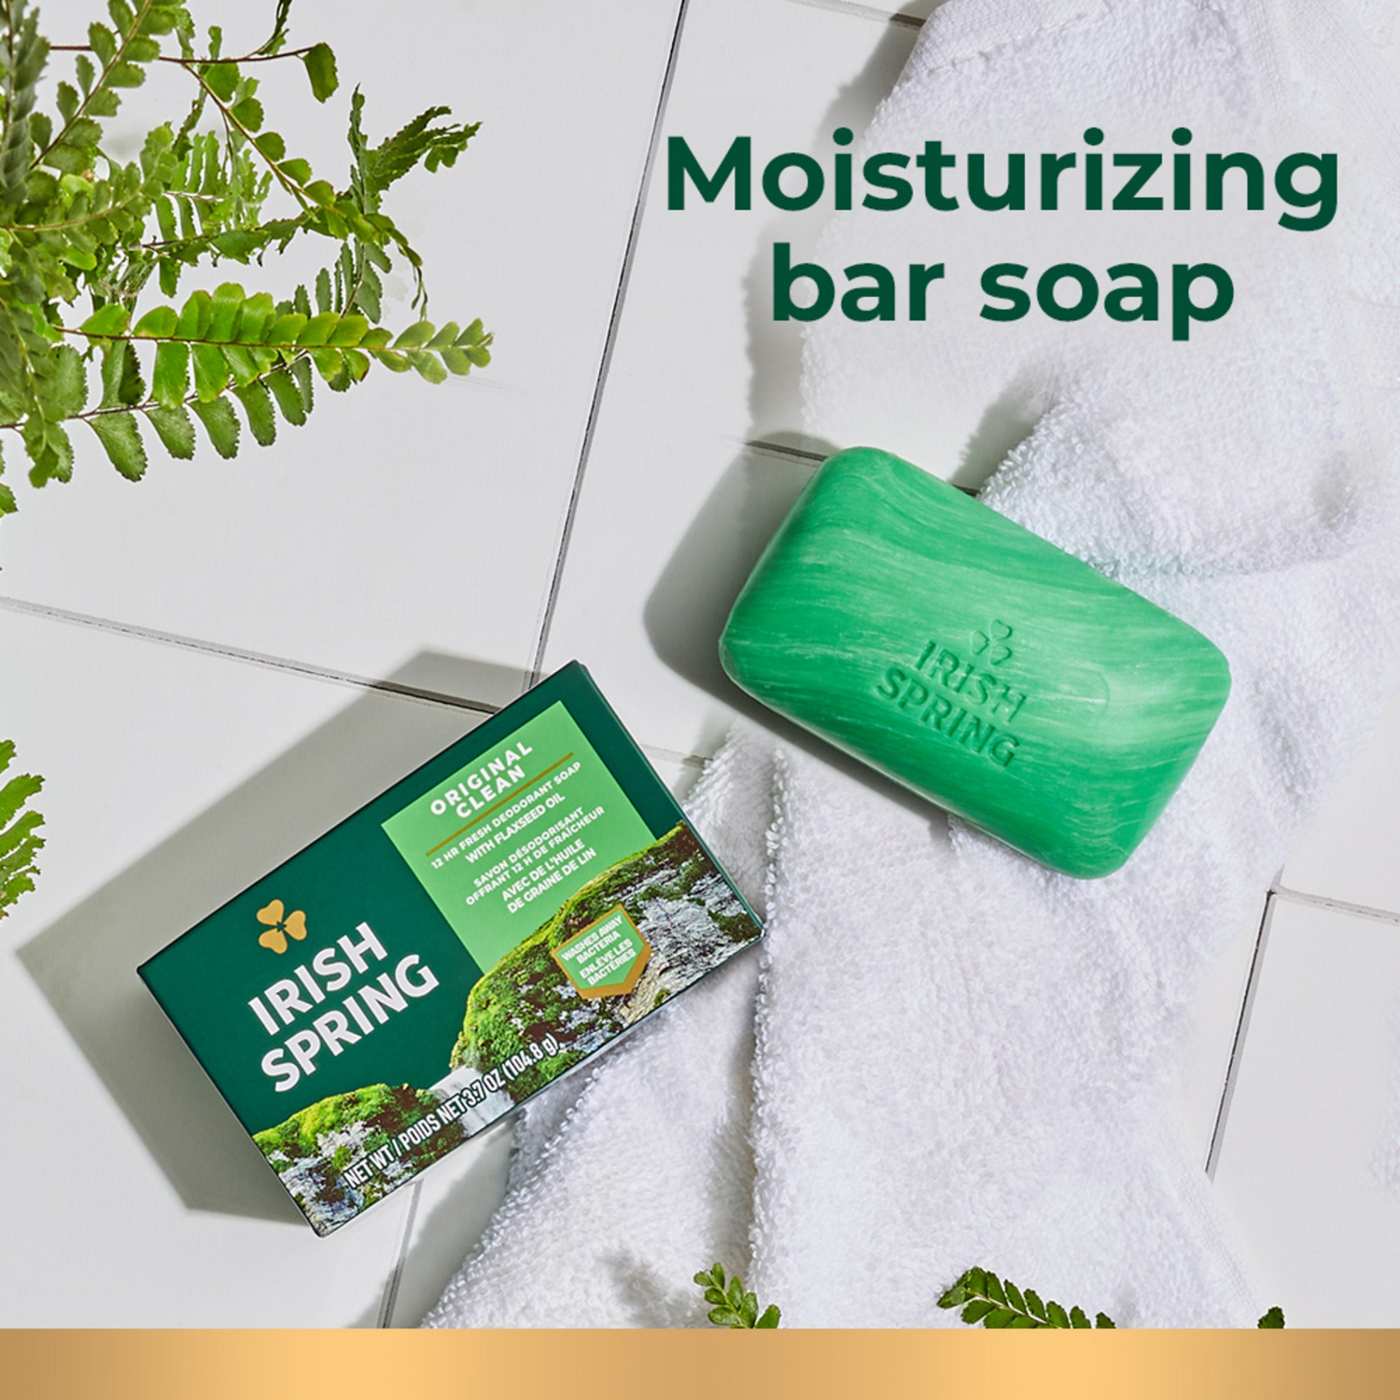 Irish Spring Original Clean Deodorant Bar Soap for Men; image 6 of 10